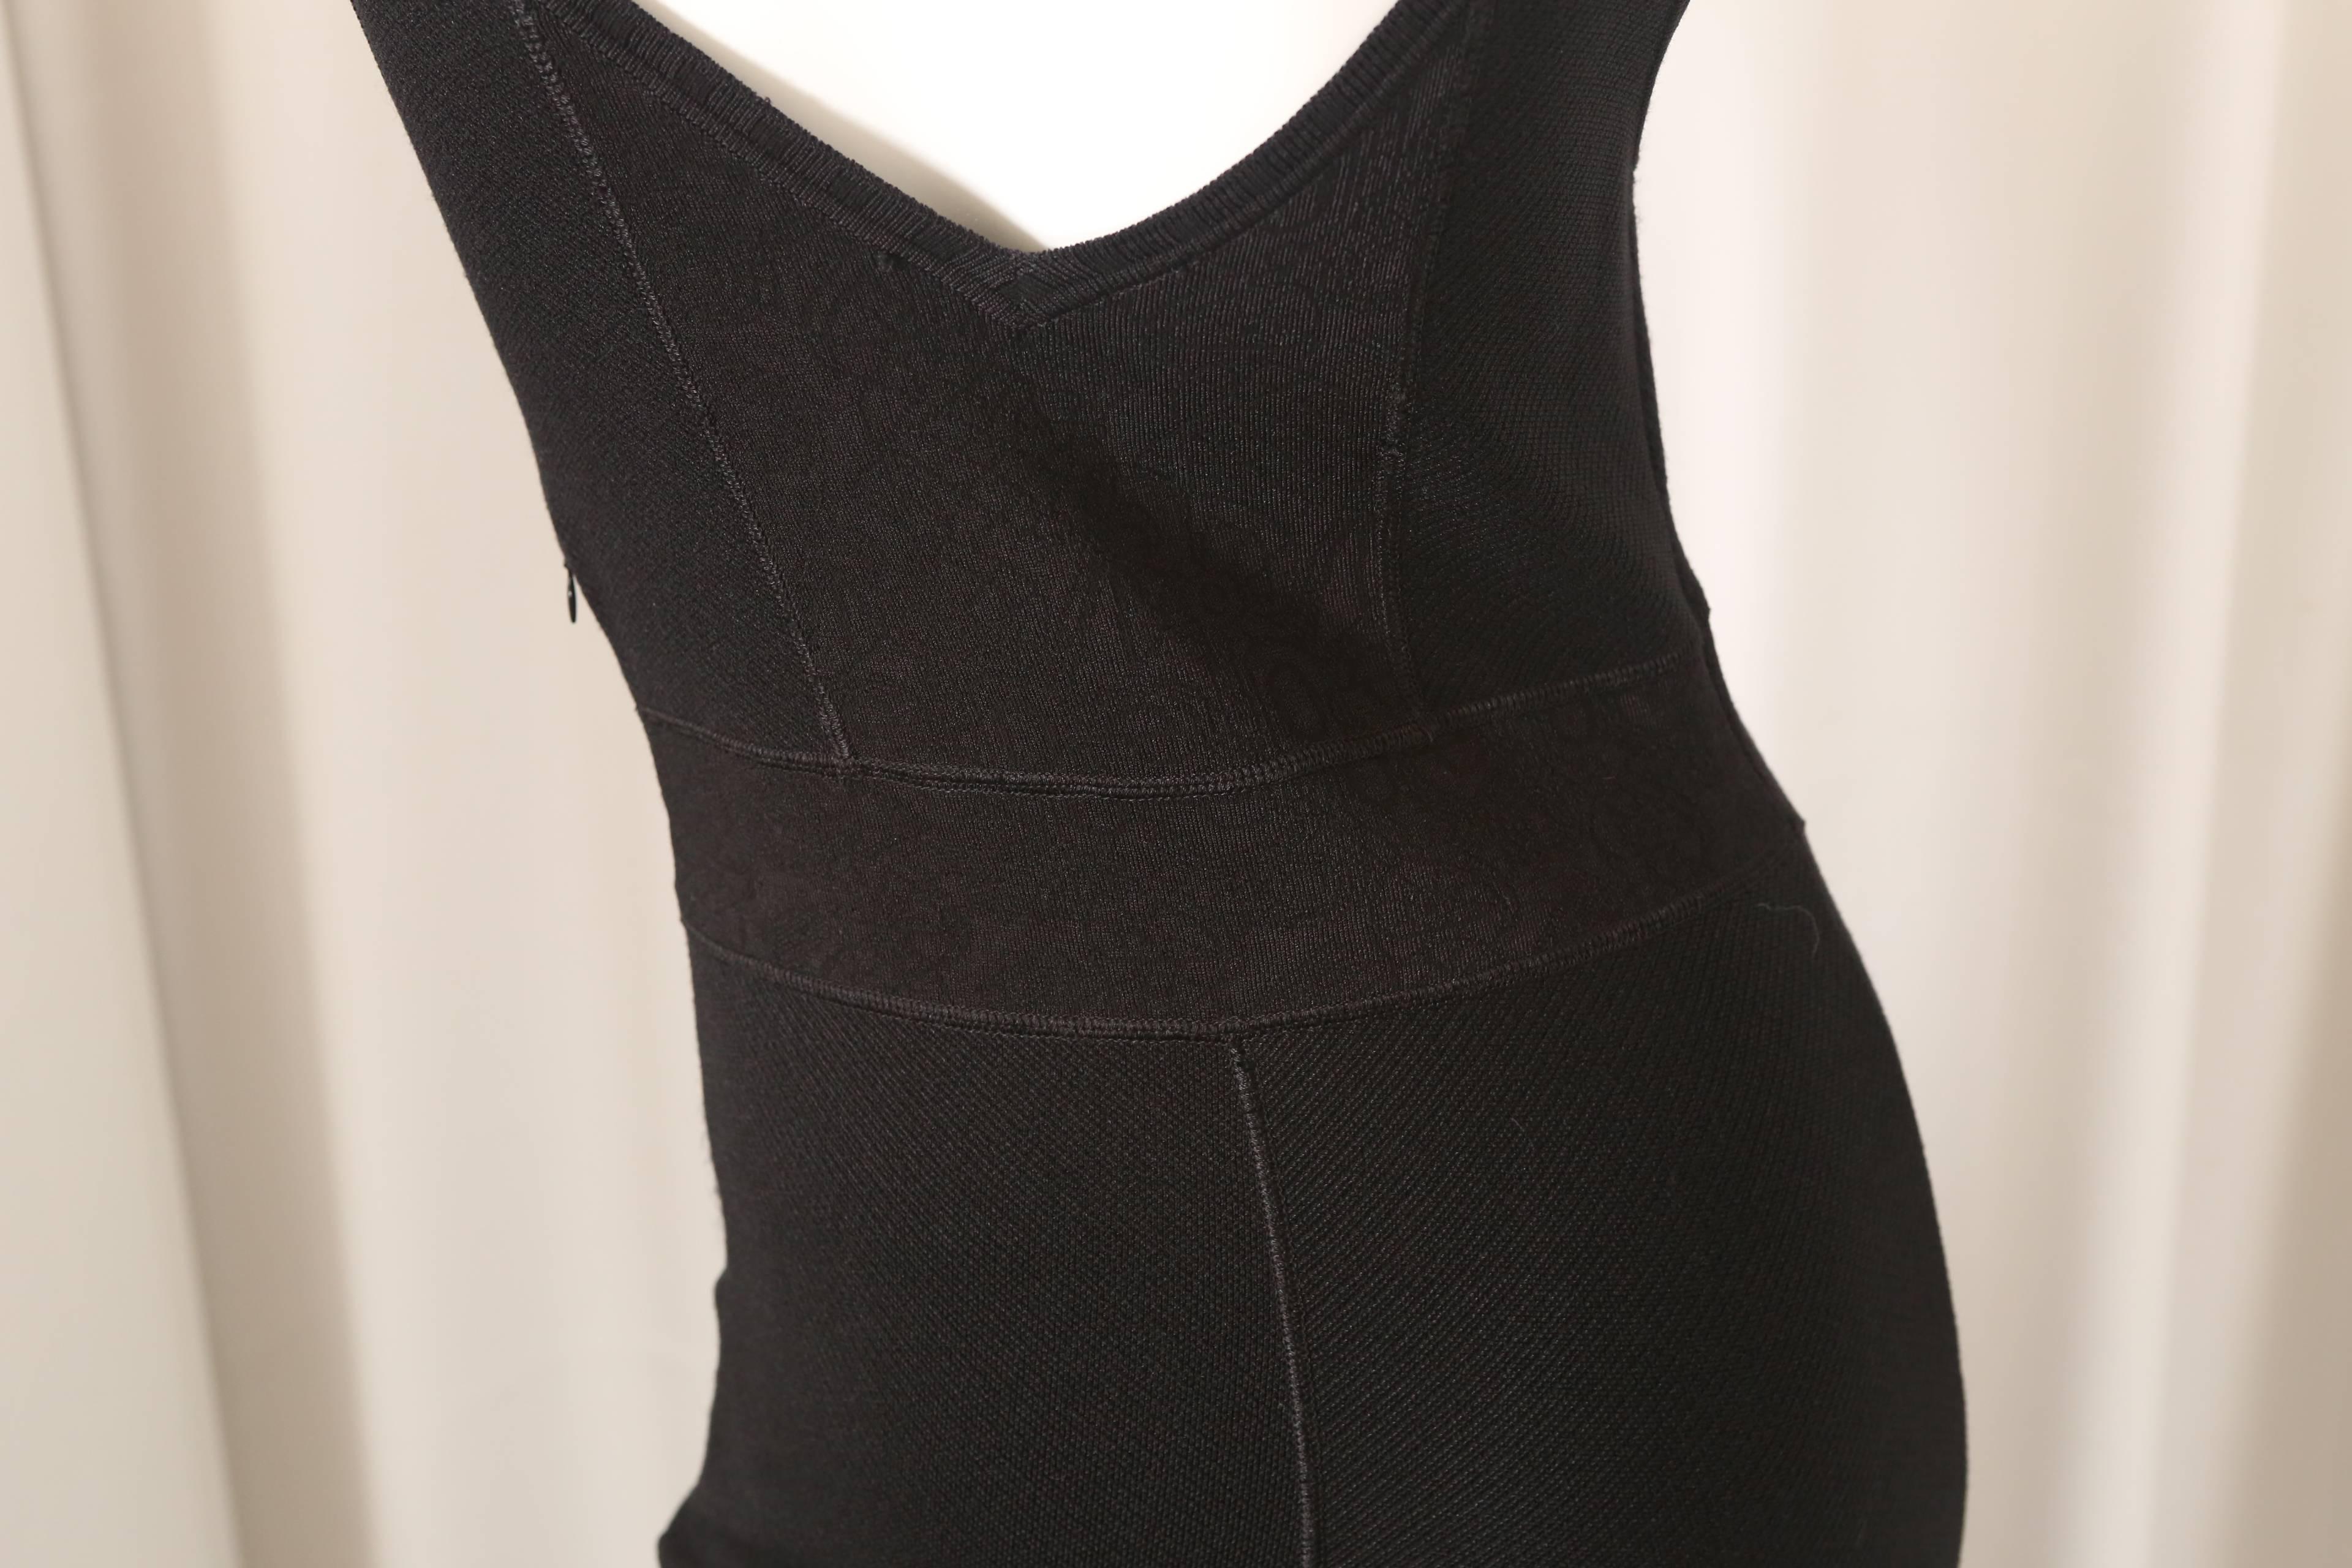 Zac Posen Sleeveless Black Textured Dress W/ Flare Bottom 1